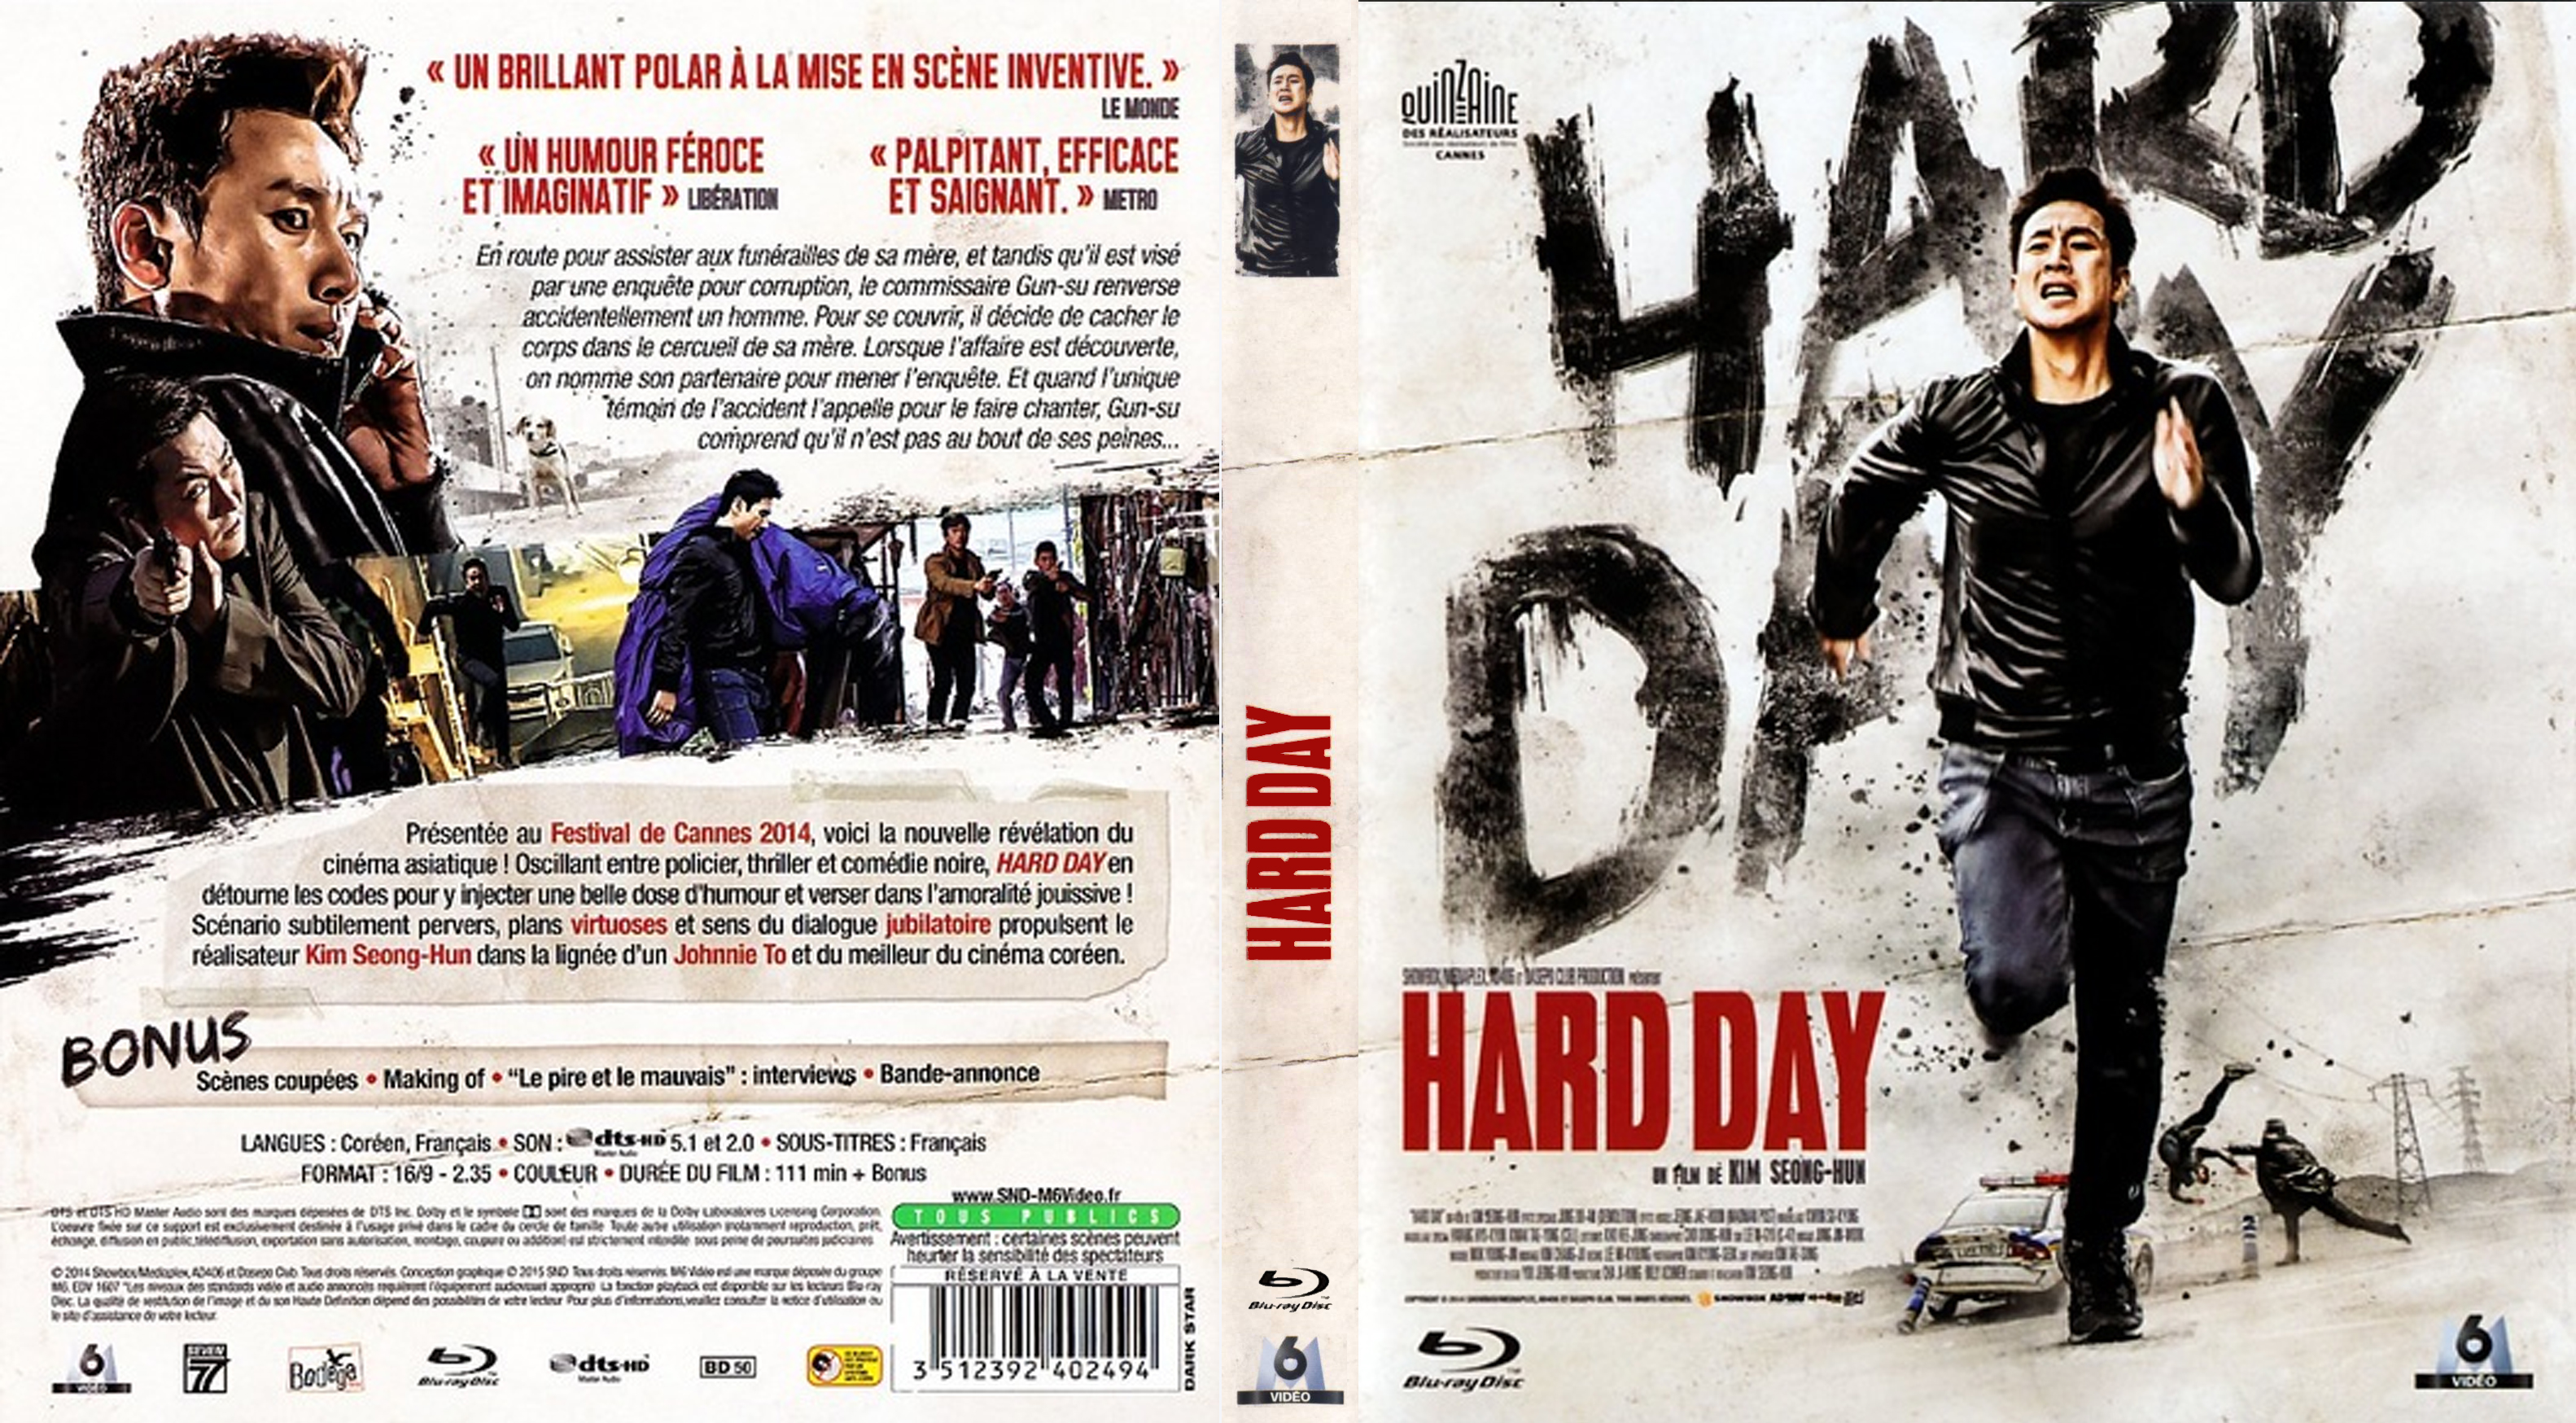 Jaquette DVD Hard day custom (BLU-RAY)